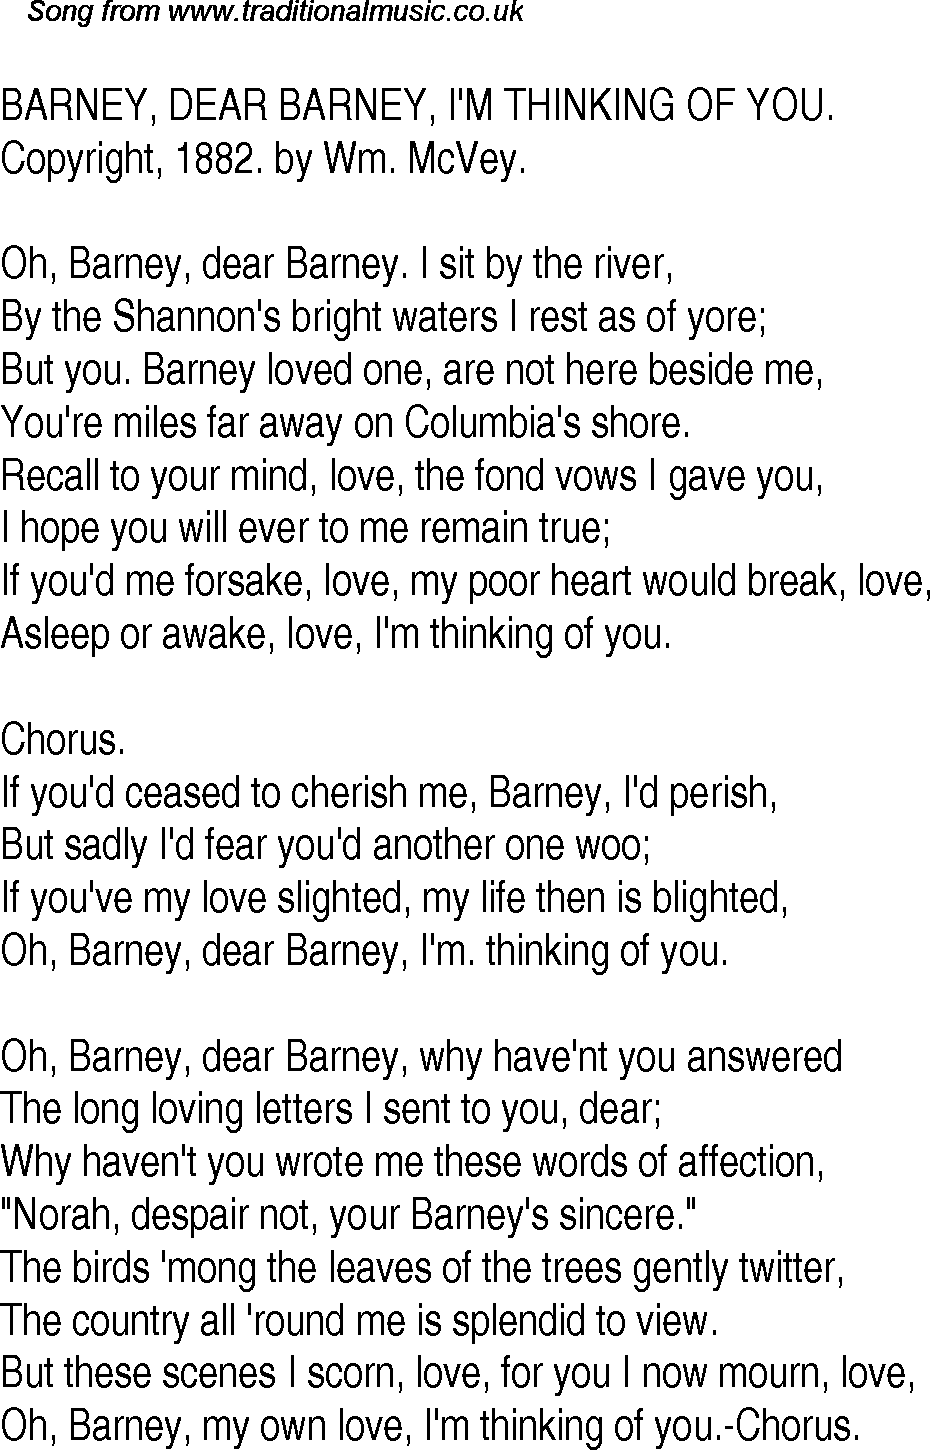 Old Time Song Lyrics 26 Barney Dear Barney I M Thinking Of You